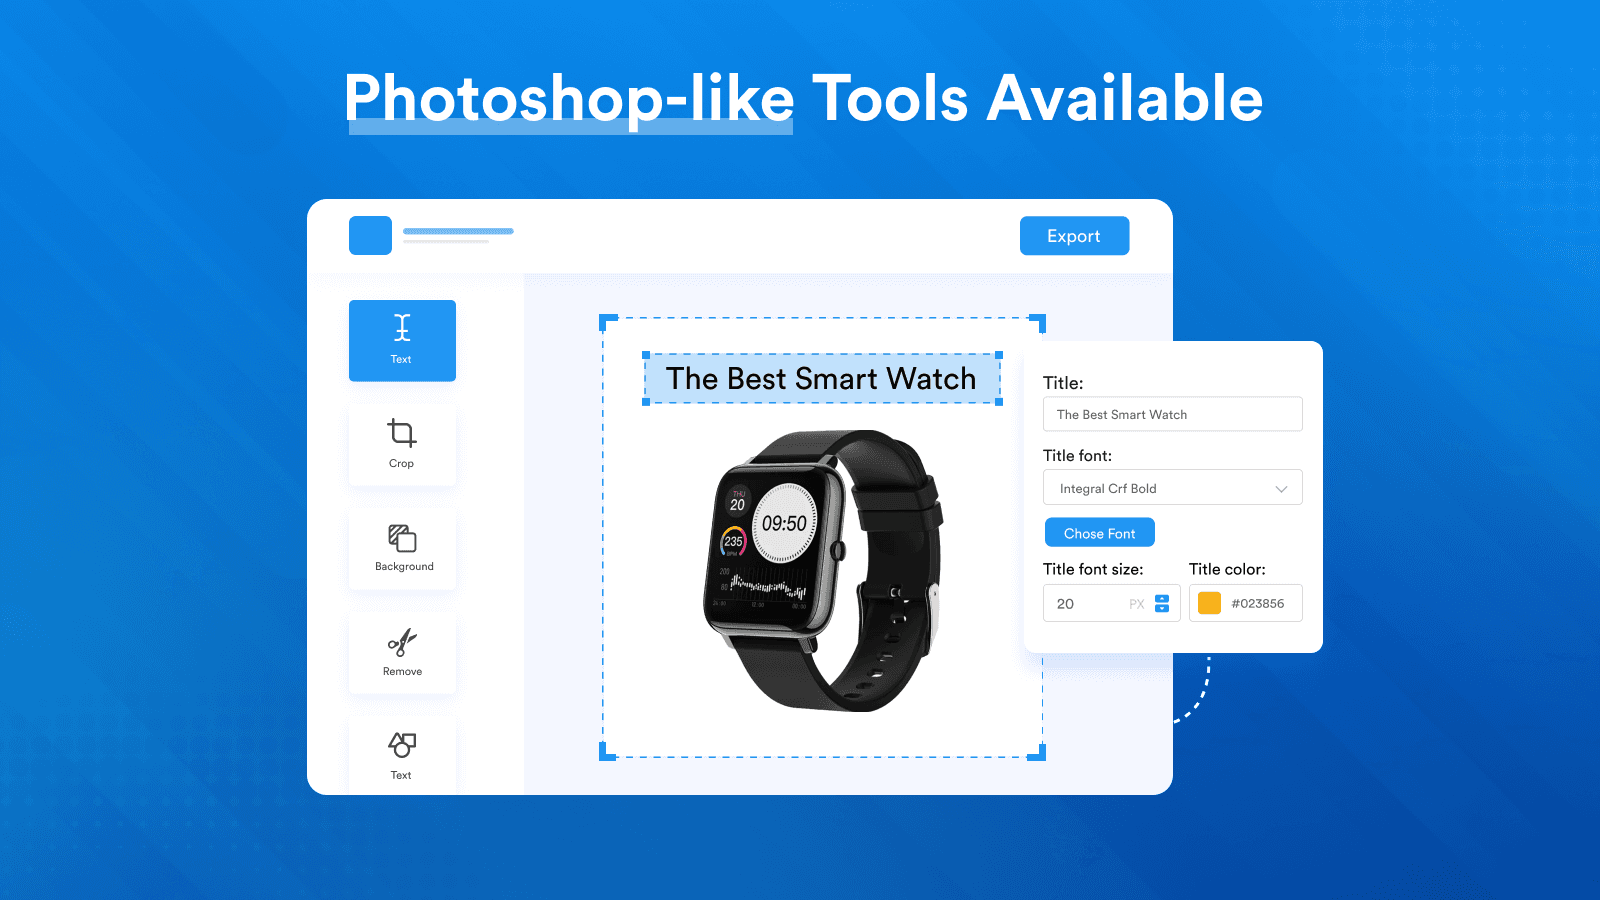 Photoshop-like tools available